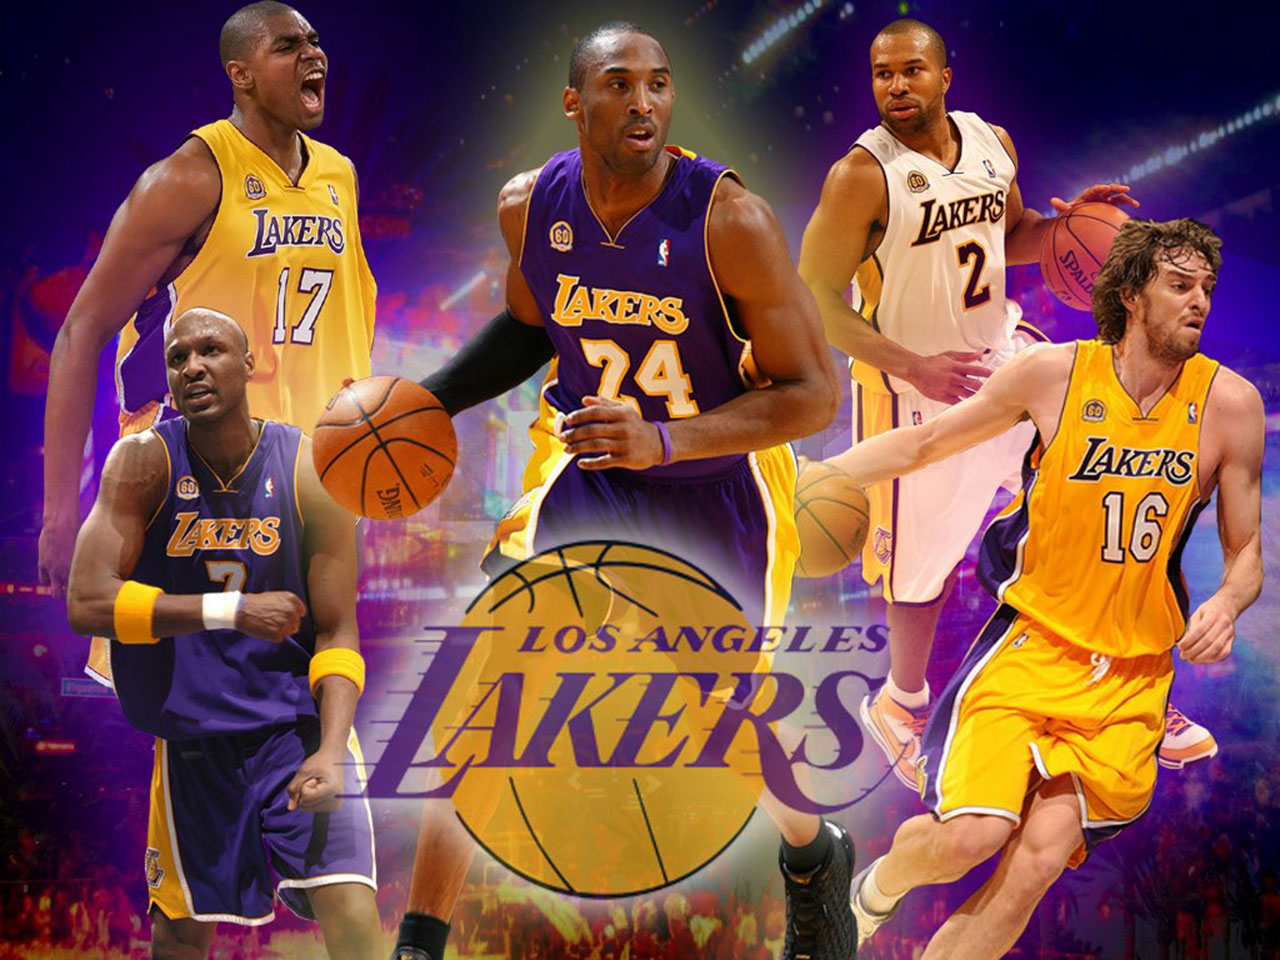 Lakers Championship Wallpaper